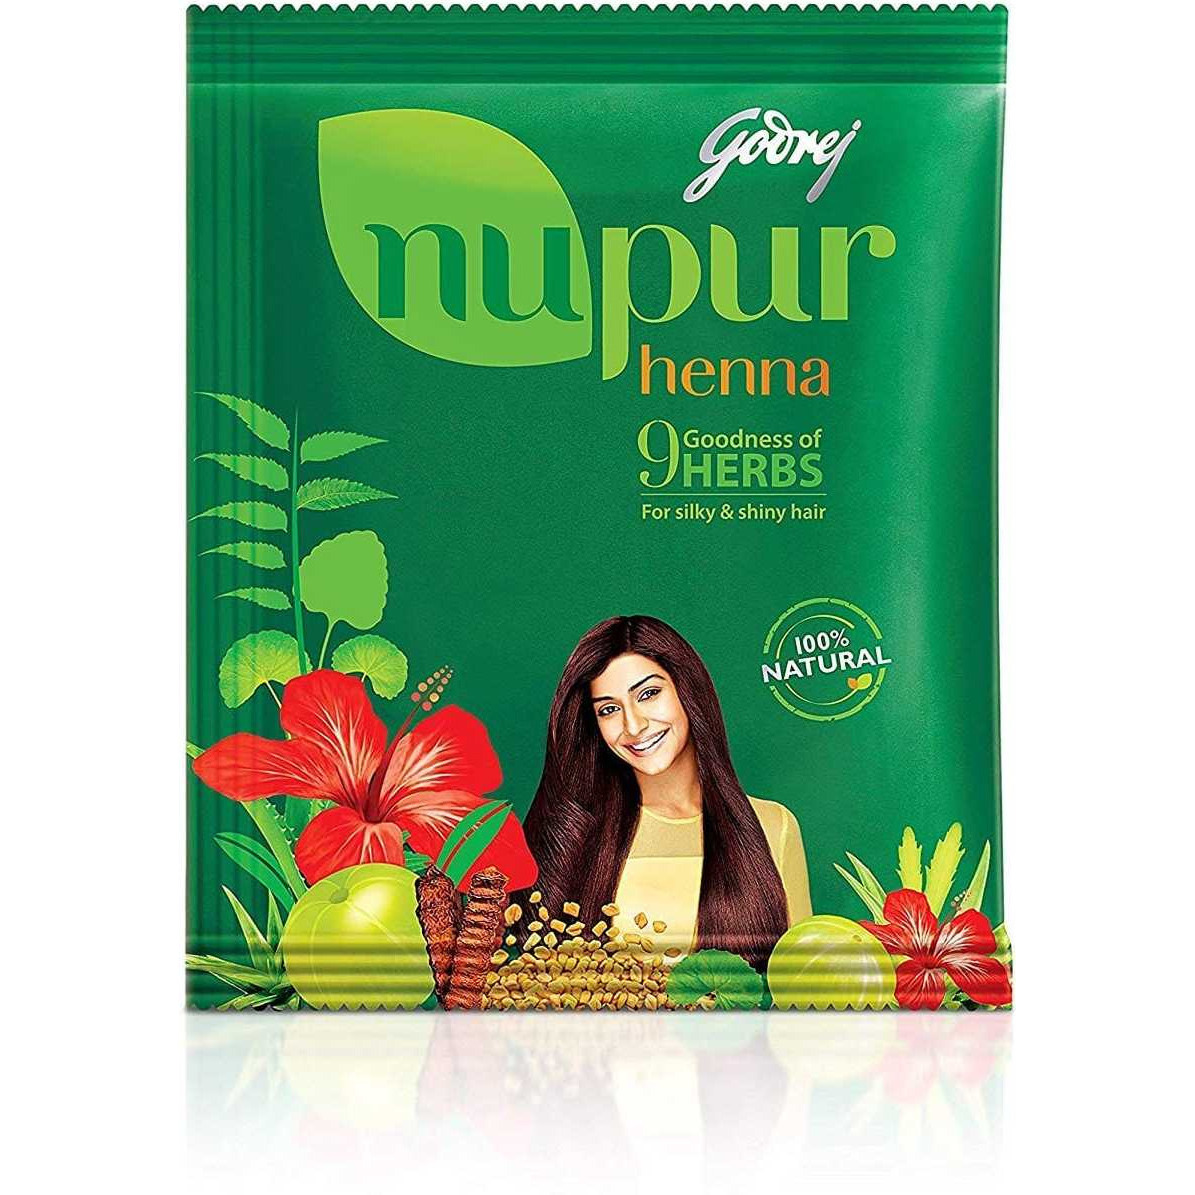 Pack of 2 - Godrej Nupur Henna 9 Herbs - 400 Gm (14 Oz)